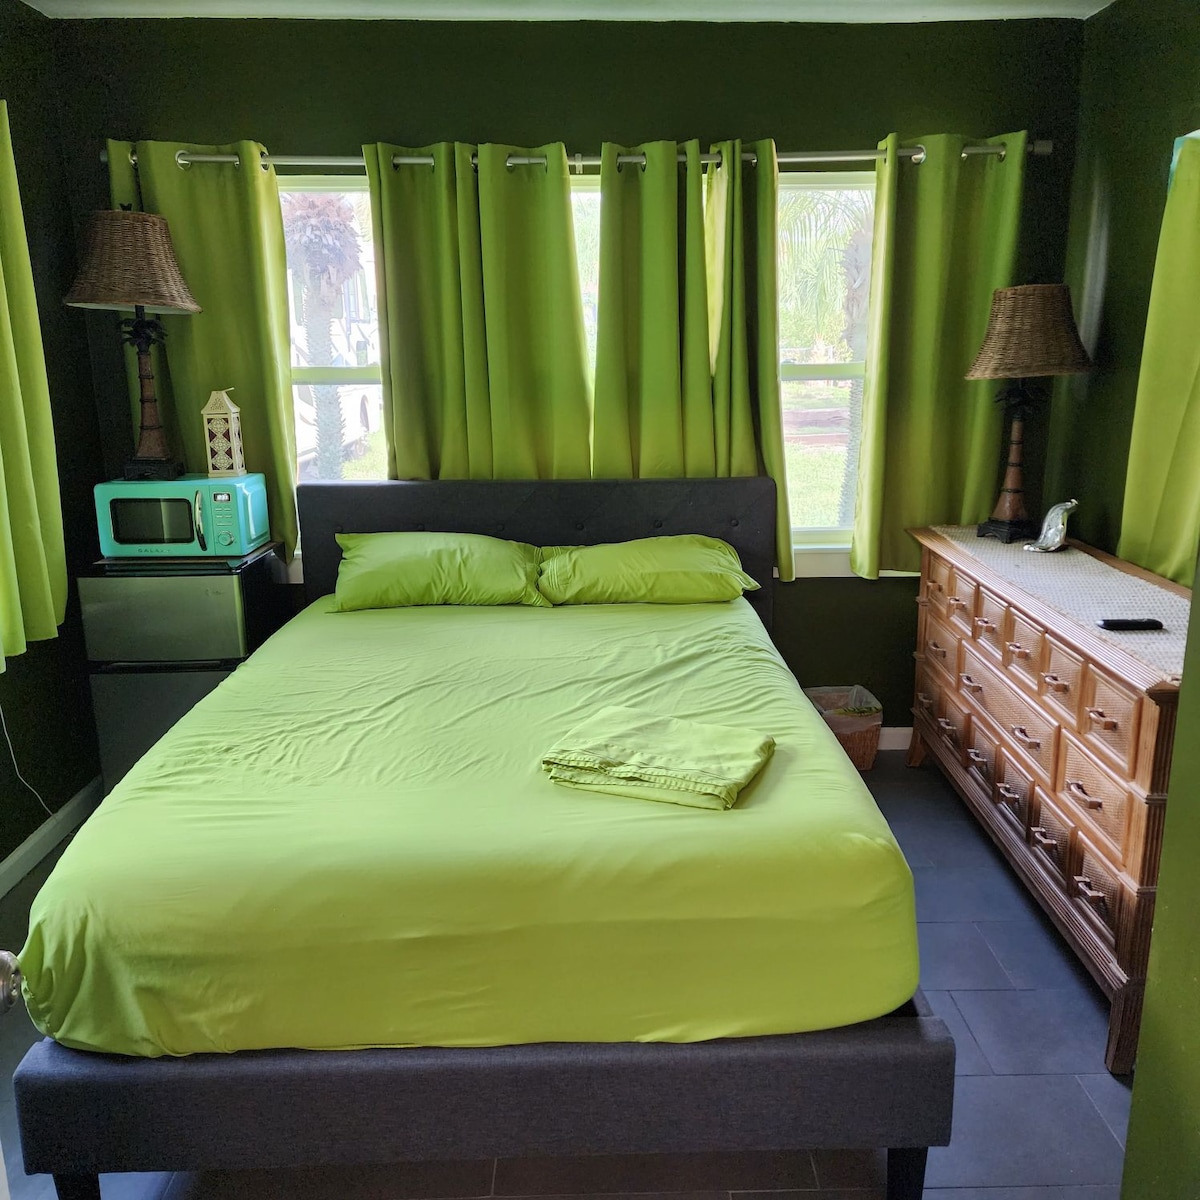 Greenest Room!